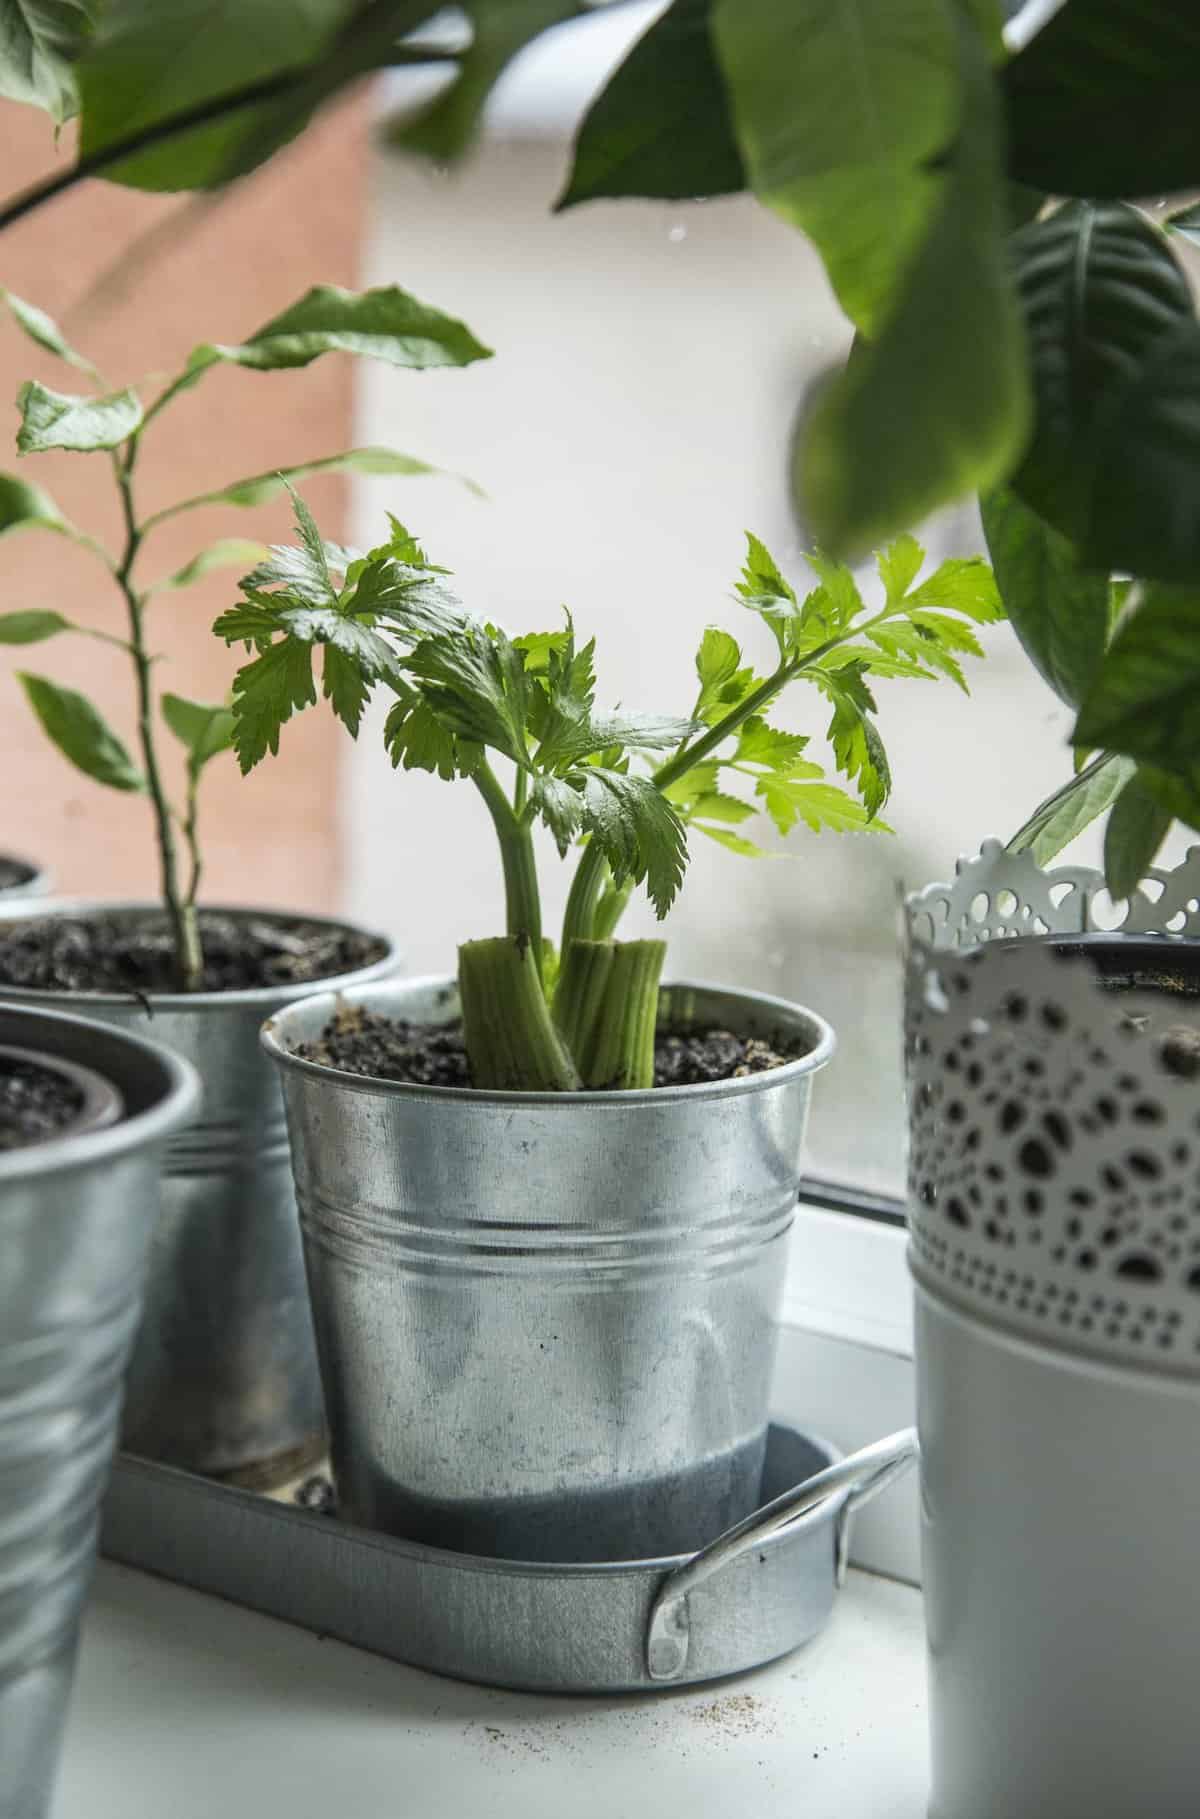 Green celery in metal pots cultivated on windowsill